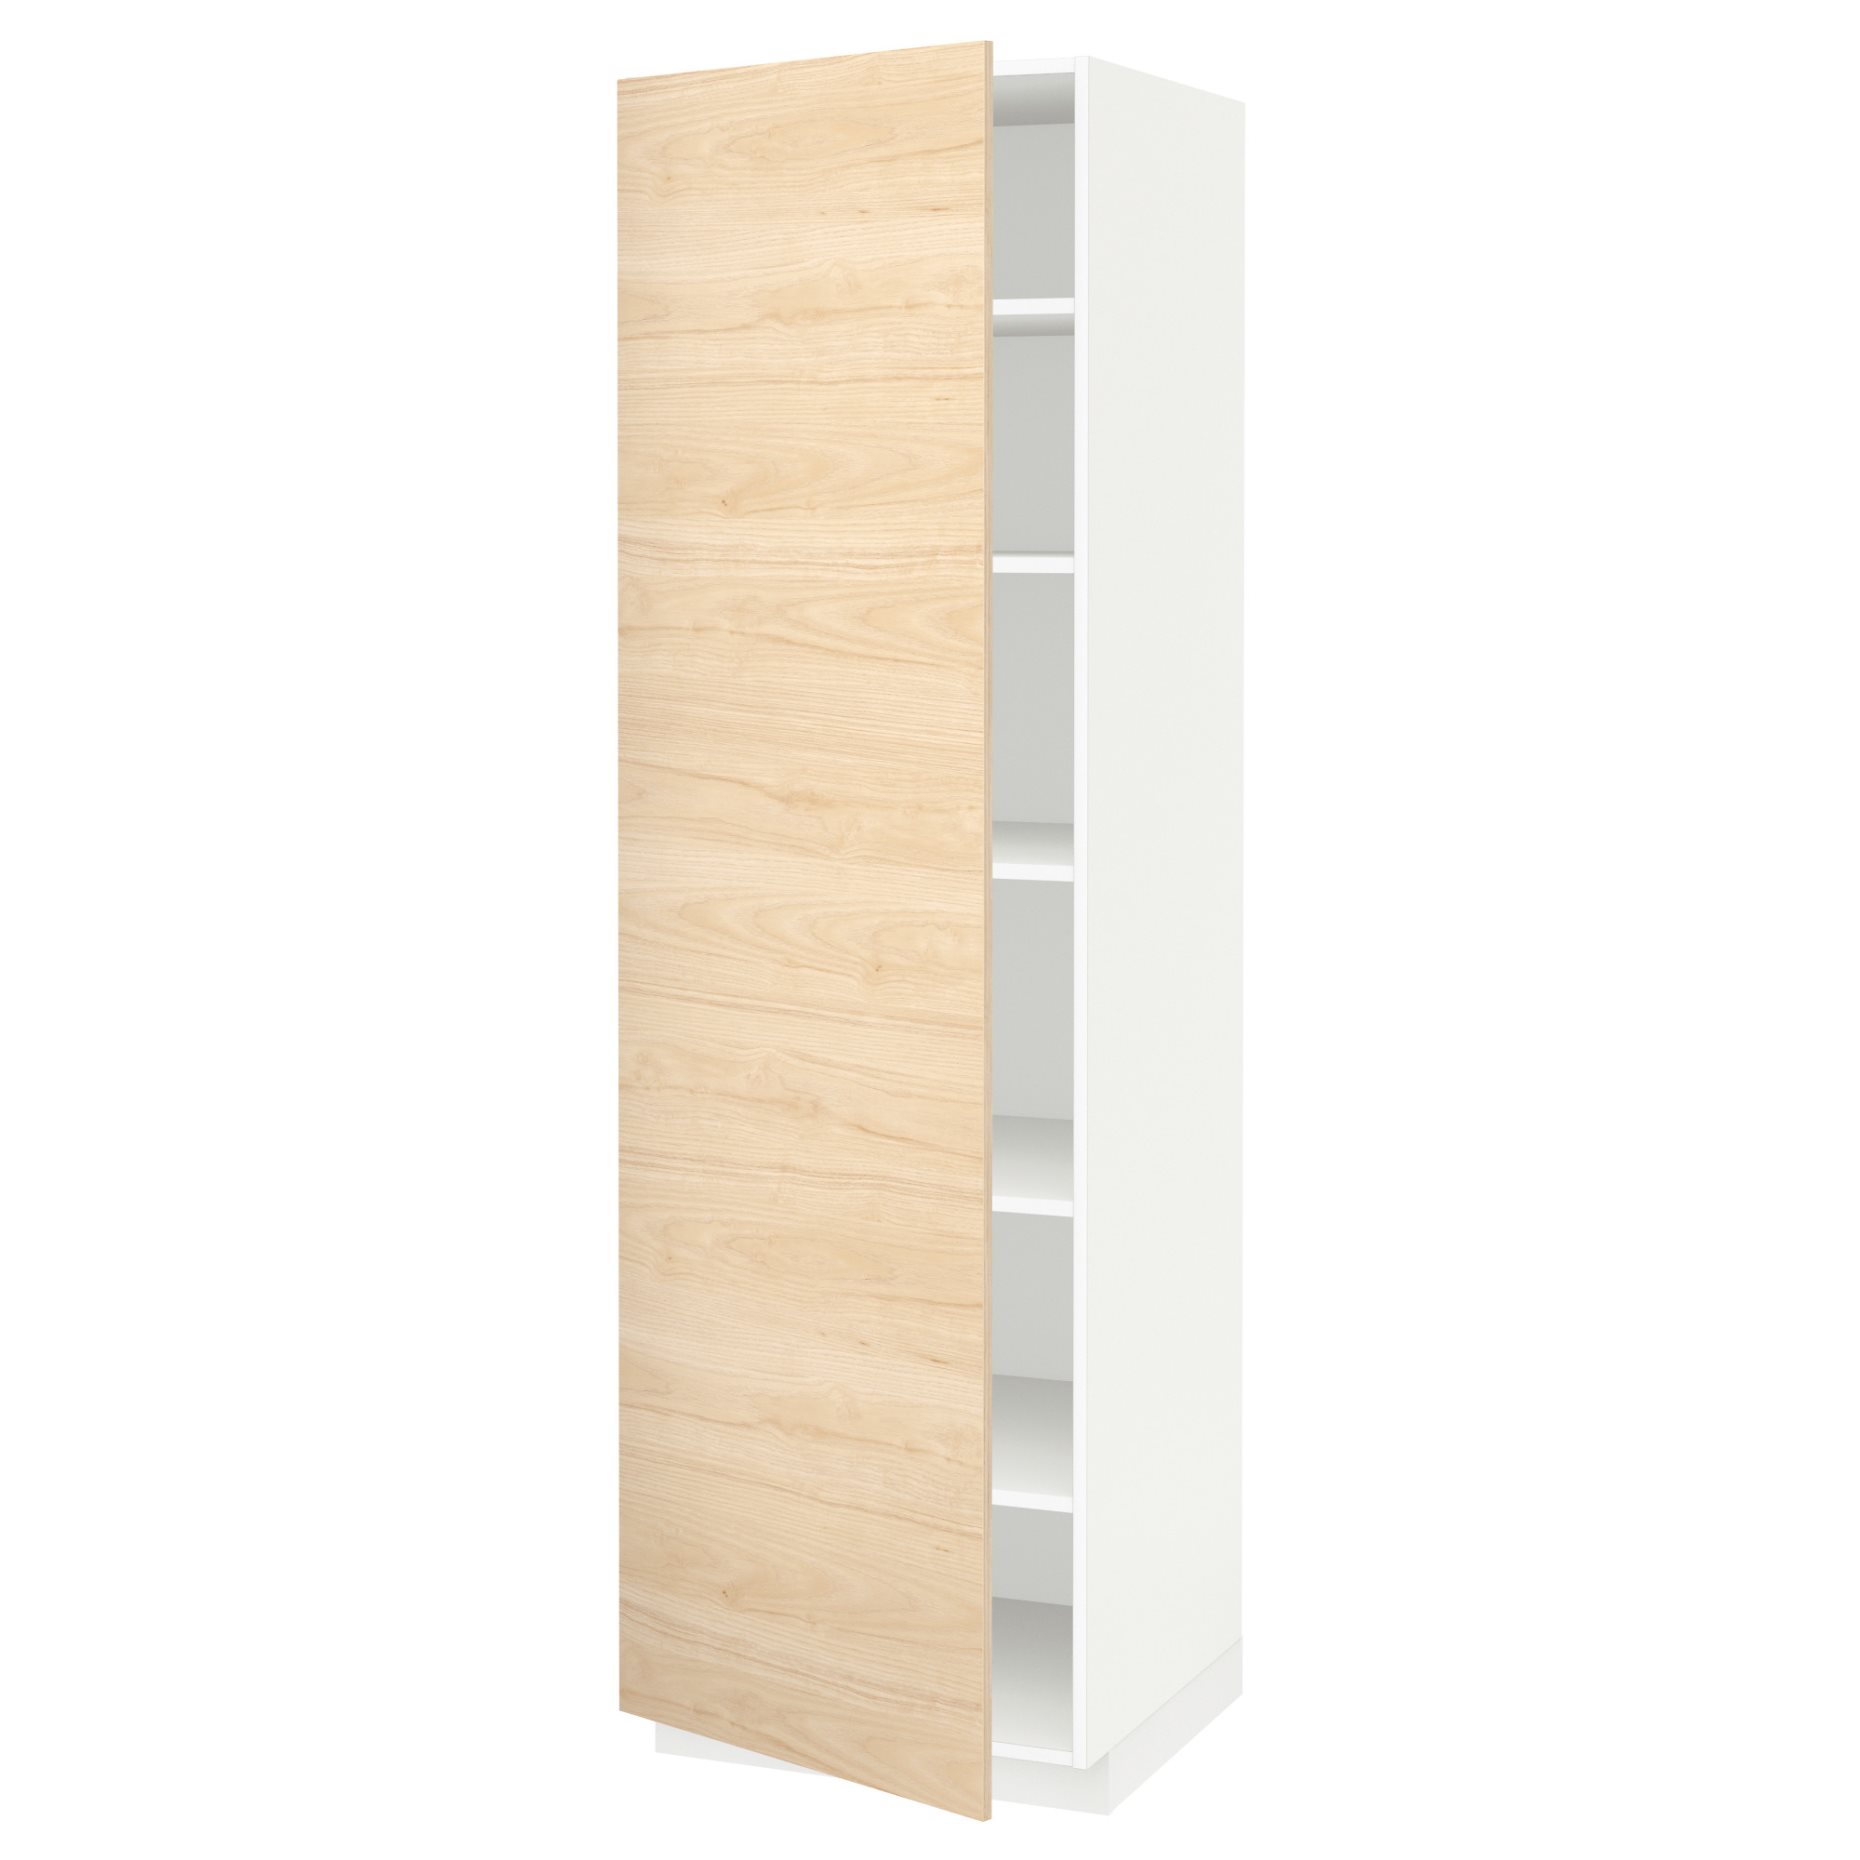 METOD, ψηλό ντουλάπι με ράφια, 60x60x200 cm, 394.621.46